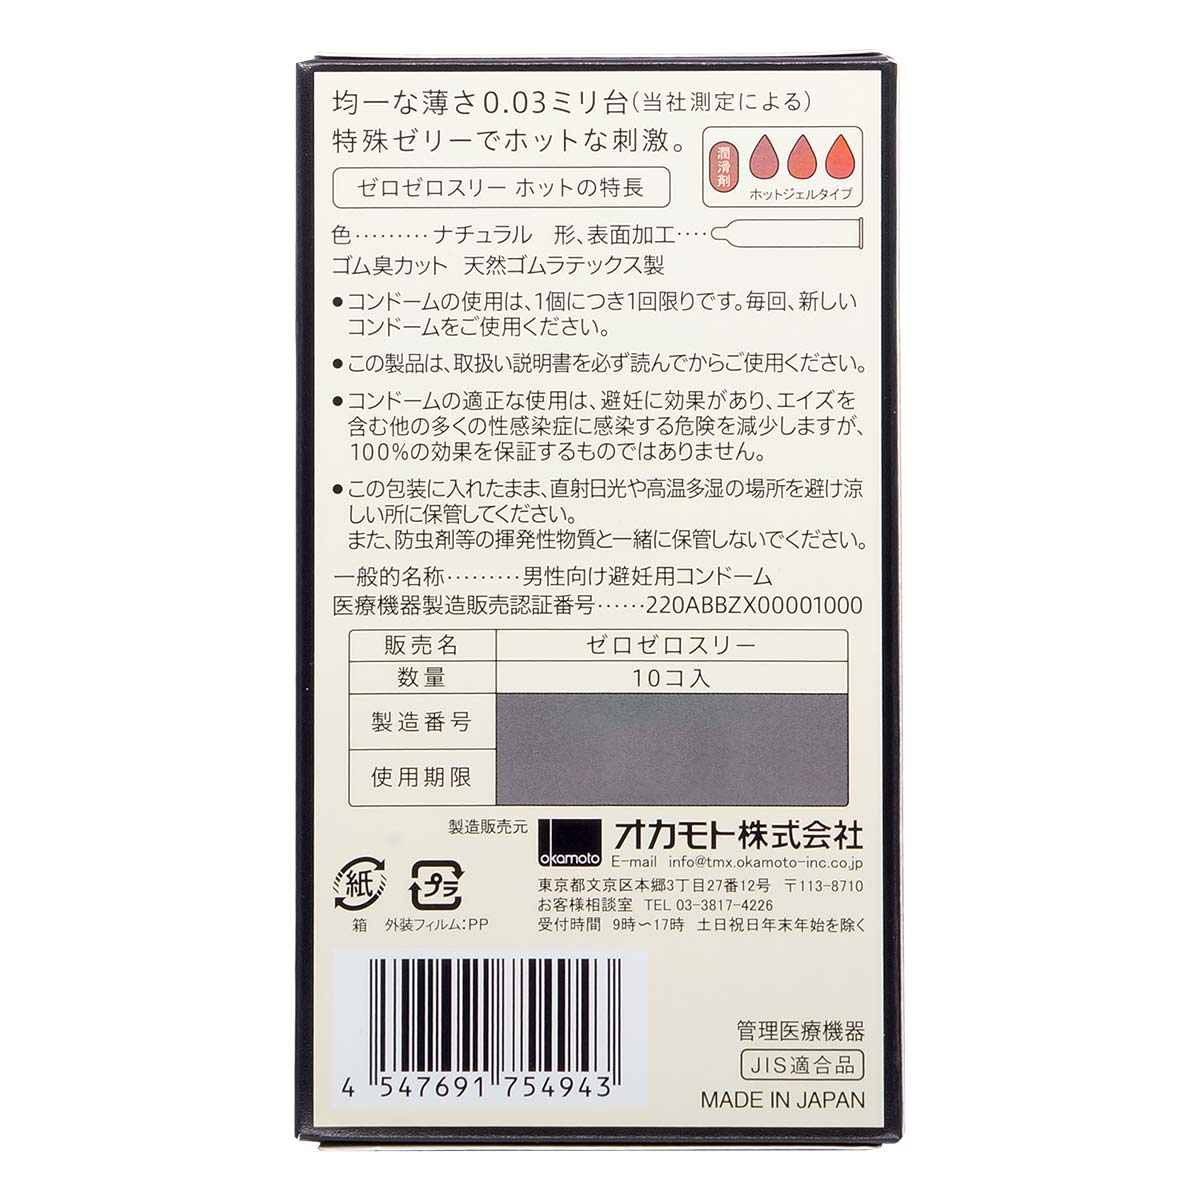 Zero Zero Three 0.03 Hot (Japan Edition) 10's Pack Latex Condom-p_3